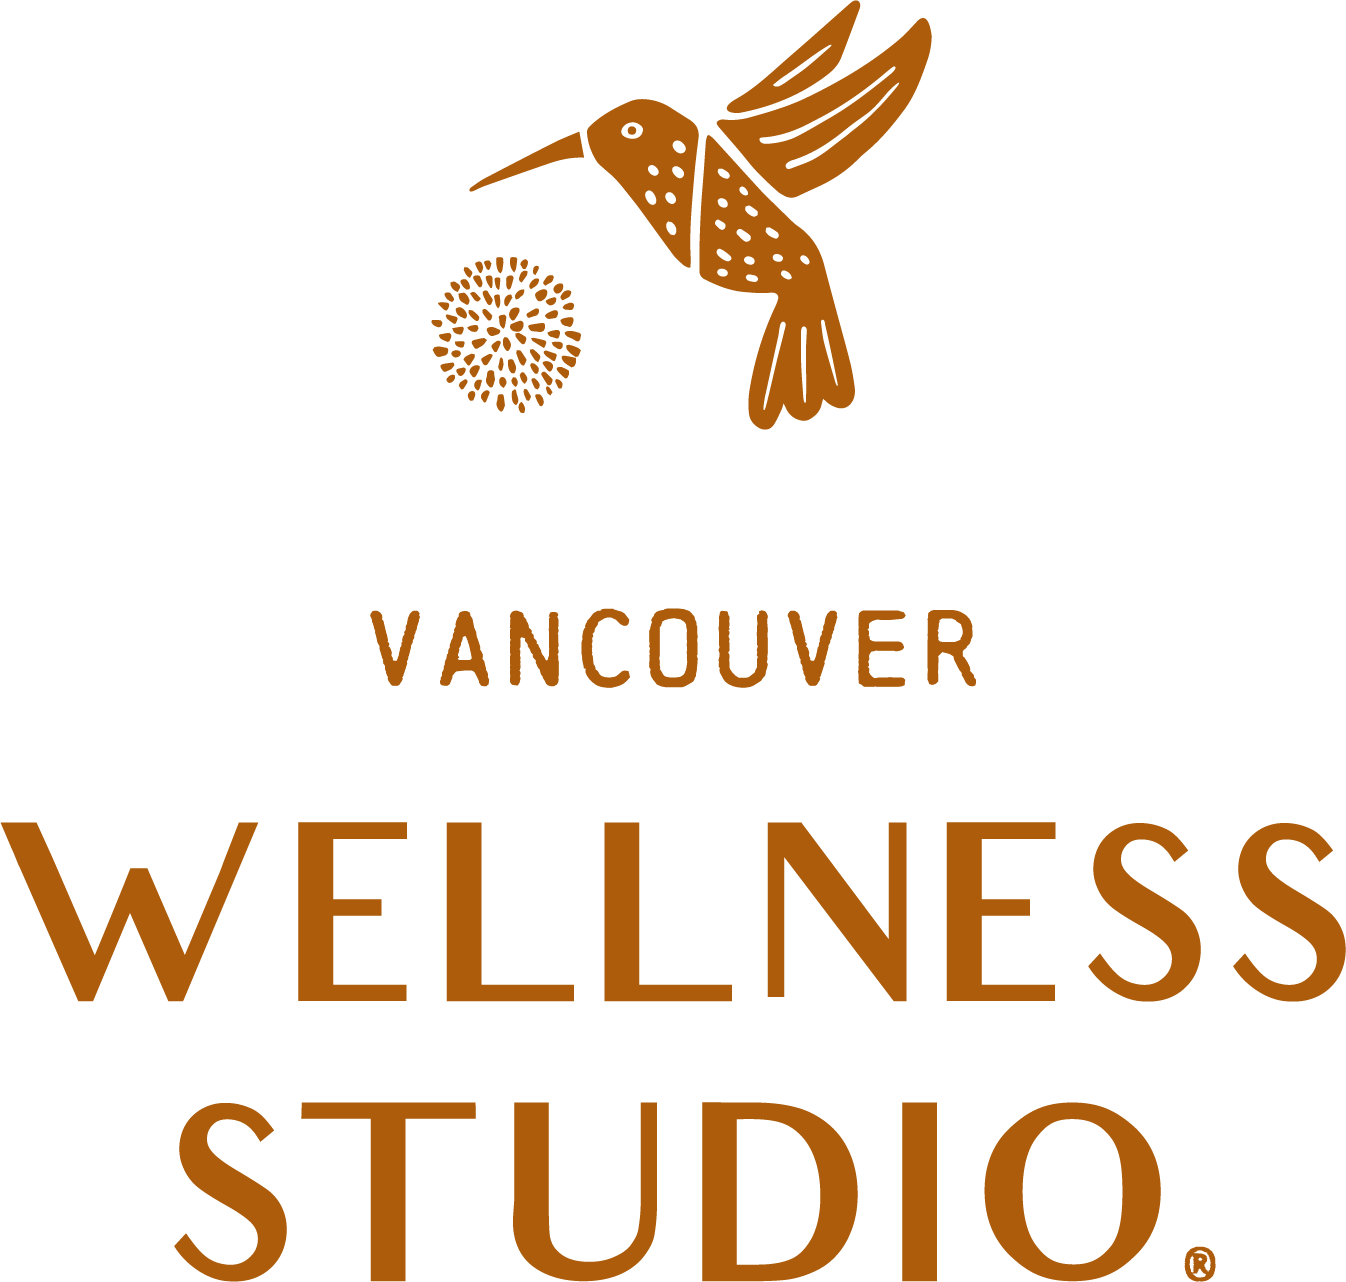 Vancouver Wellness Studio